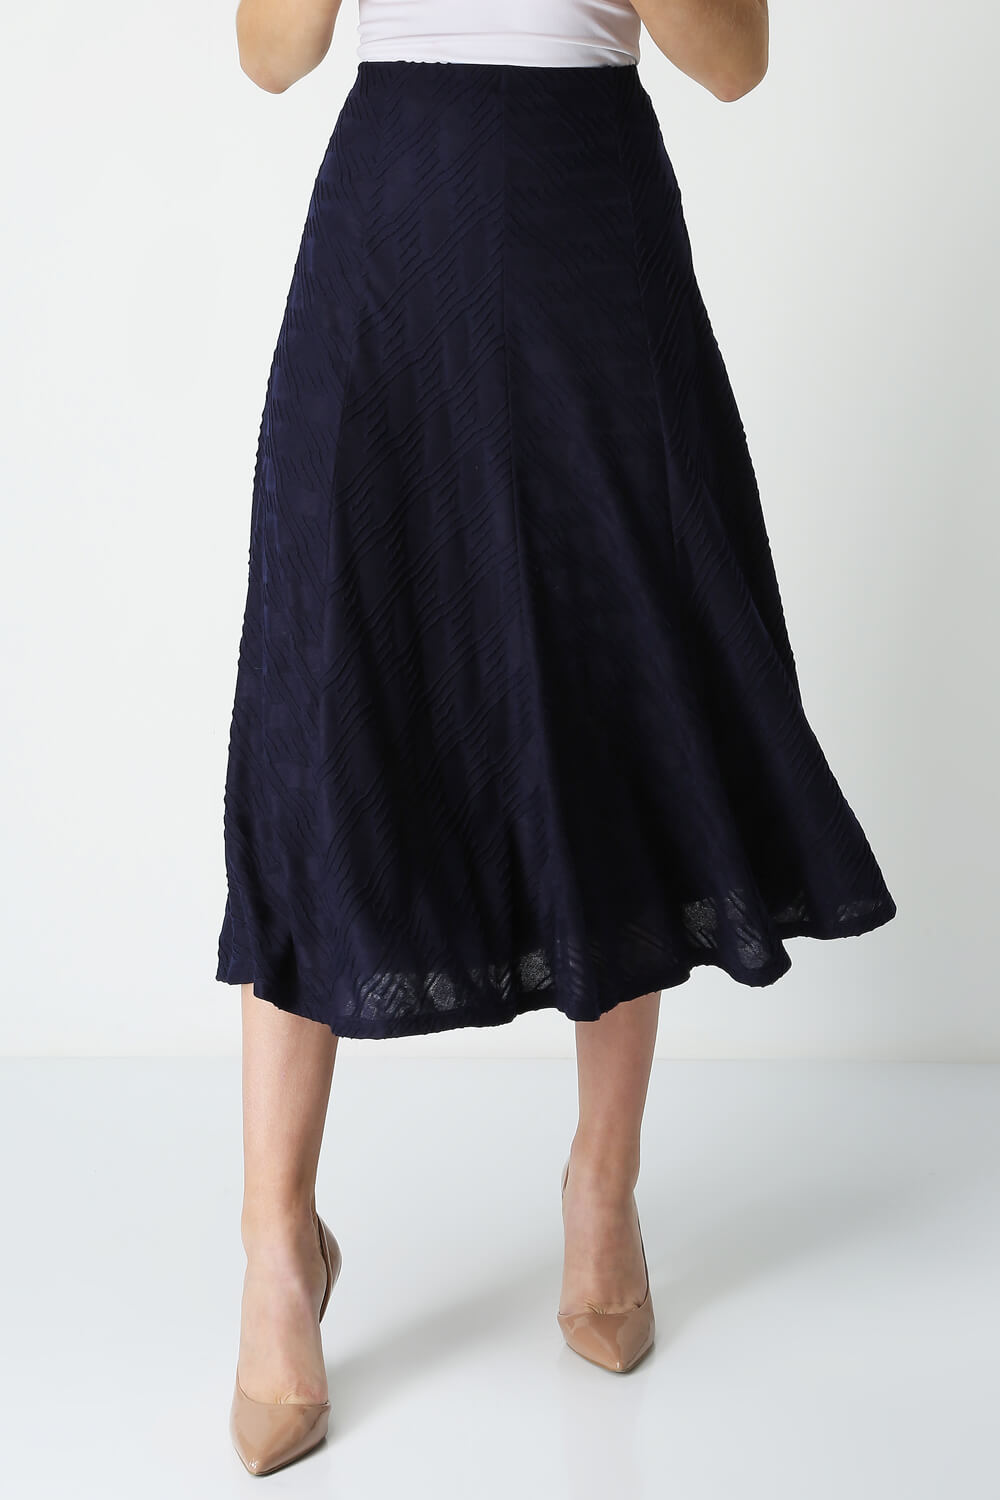 Textured A Line Midi Skirt in Navy - Roman Originals UK